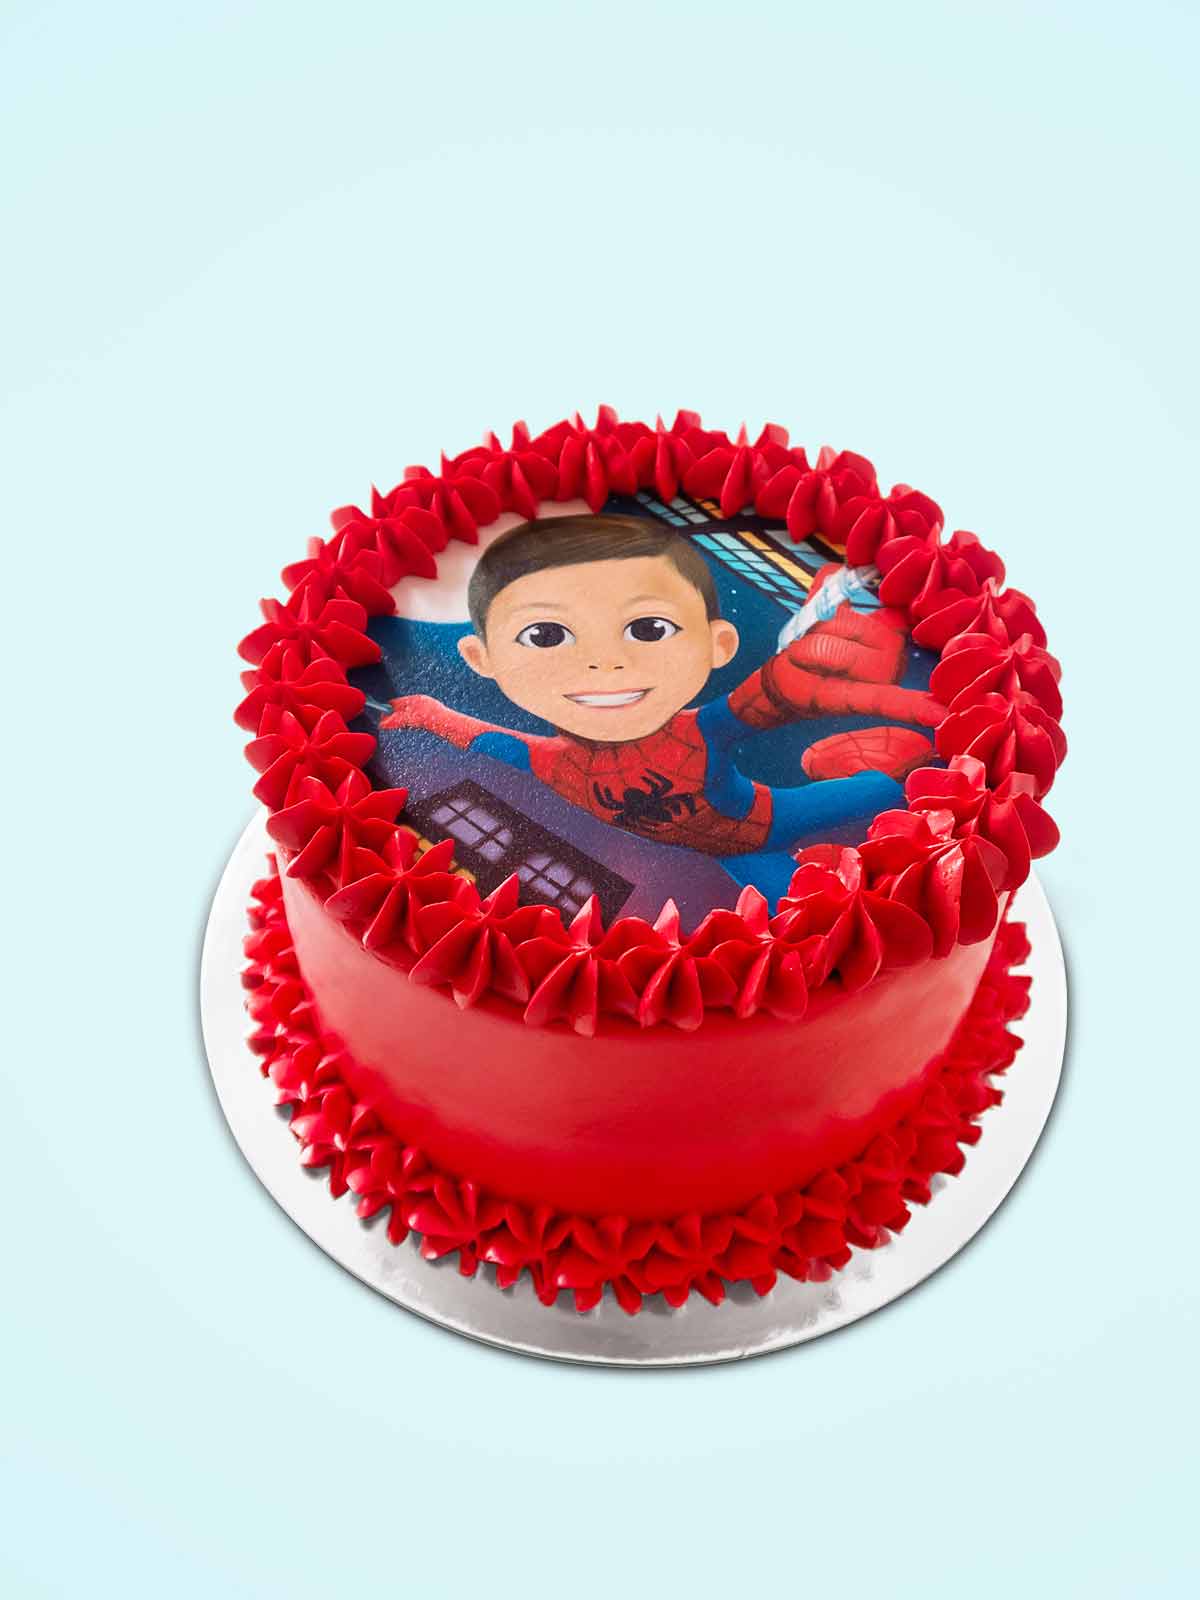 Celebrate with Cake!: Batman themed single tier Cake